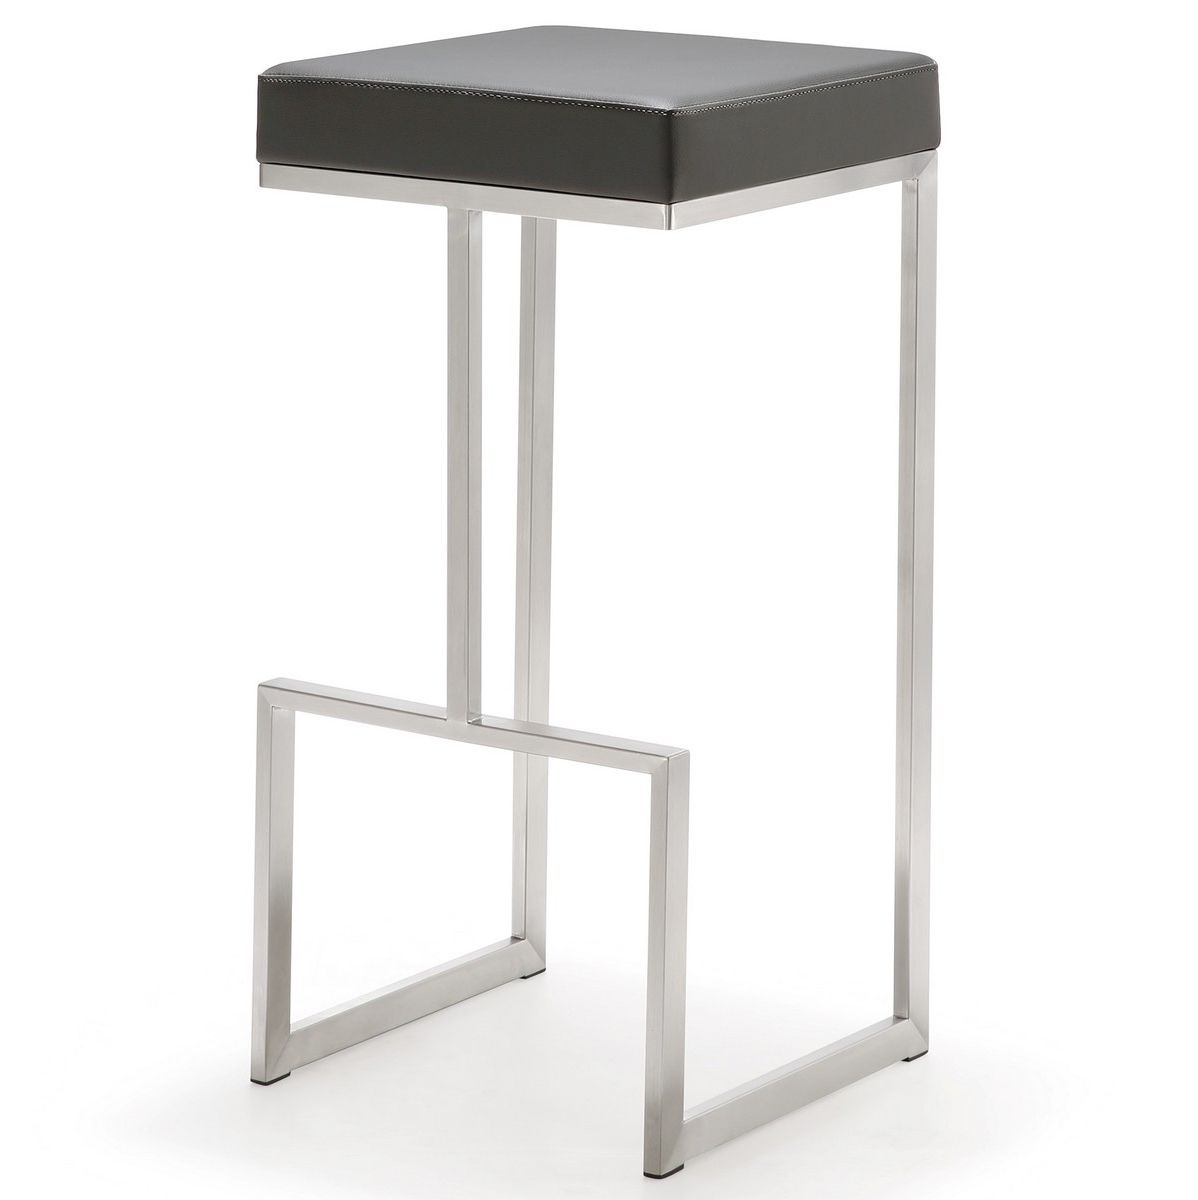 2019 Tov Furniture Ferrara Grey Stainless Steel Barstool – Set Of 2 K3603 At Regarding Stainless Steel And Gray Desks (View 14 of 15)